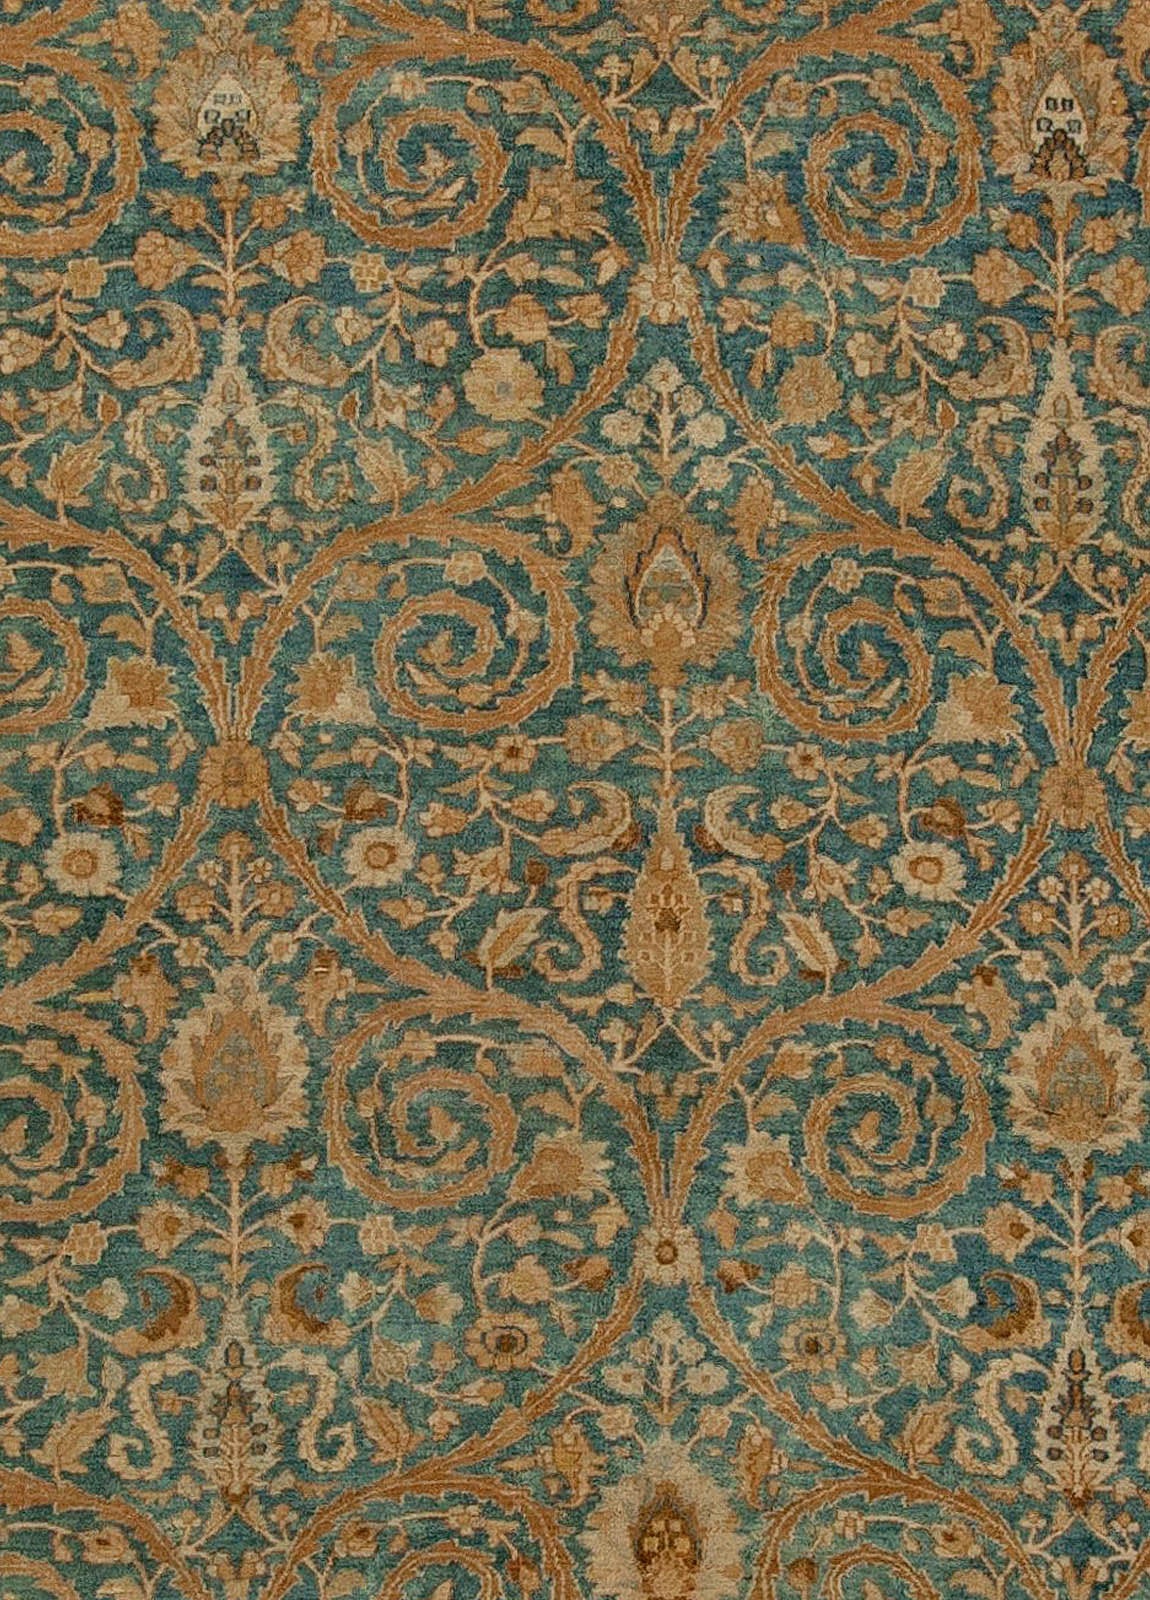 Antique Persian Khorassan Brown Green Handmade Wool Rug
Size: 13'6